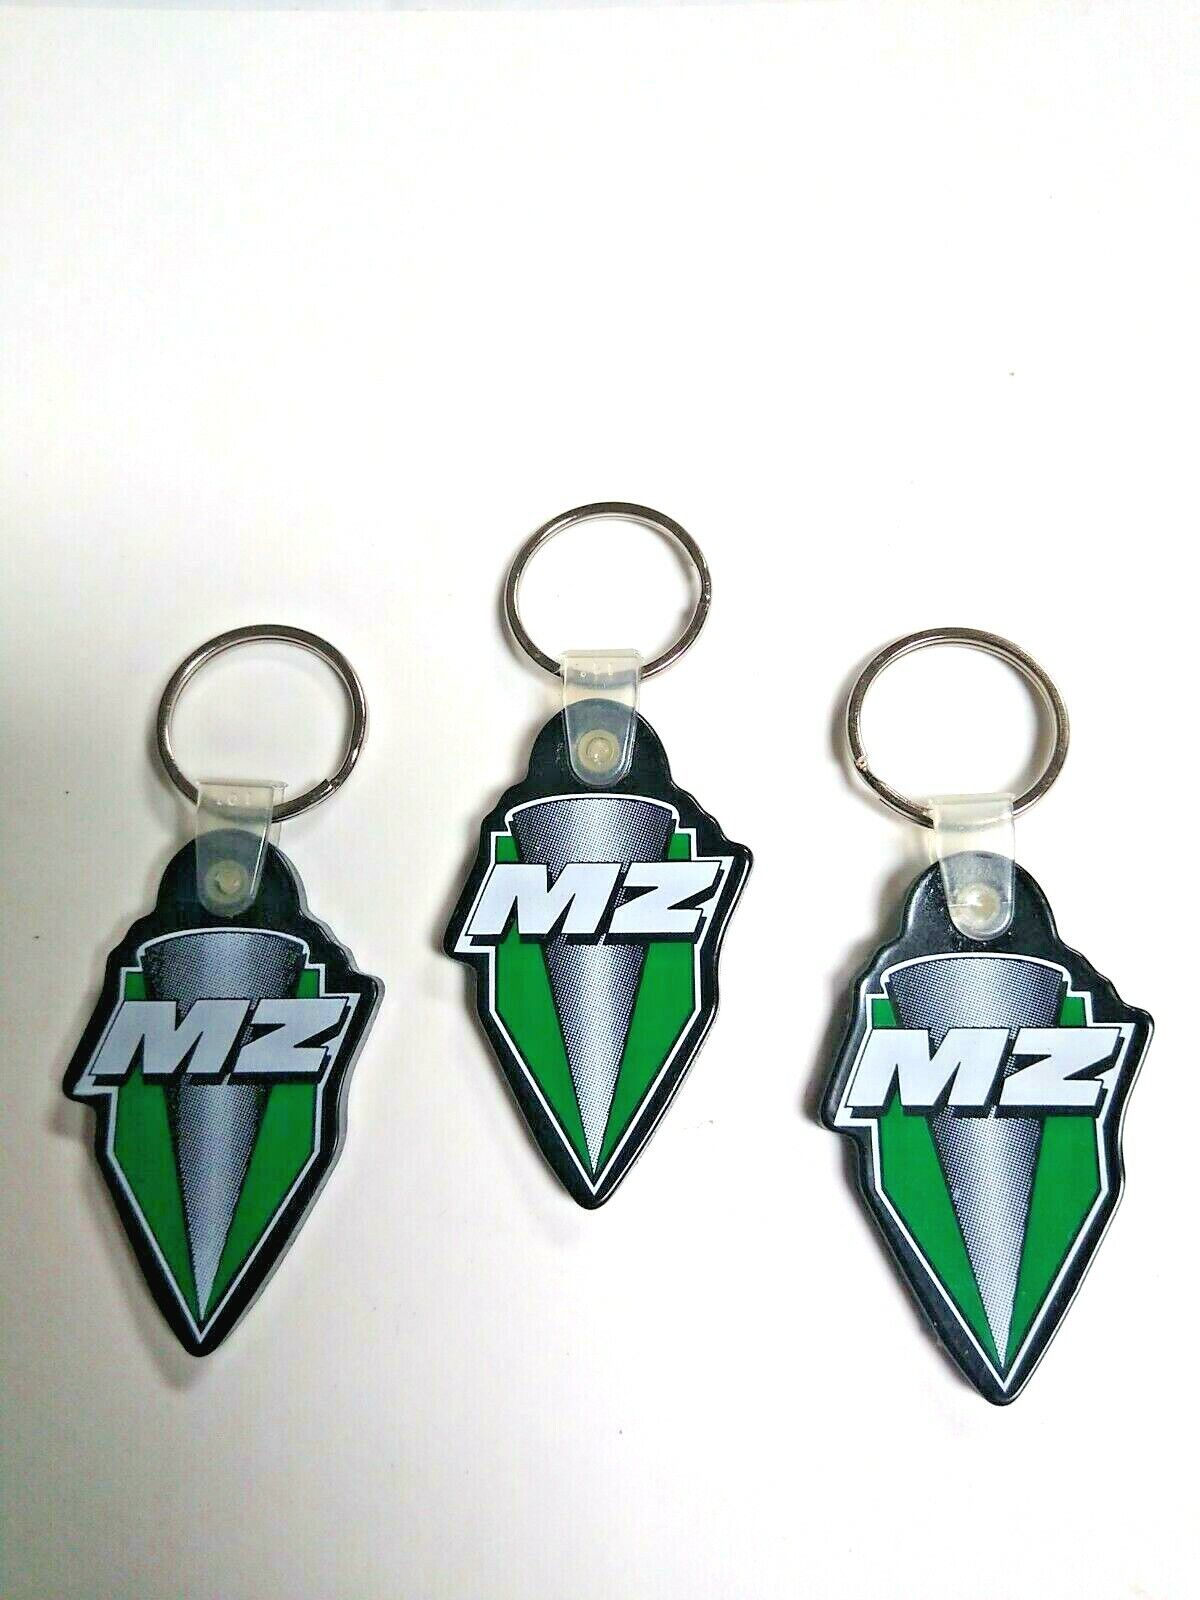 MZ / MUZ MOTORRAD VINTAGE KEYCHAINS (THREE PACK) WITH MZ LOGO. 